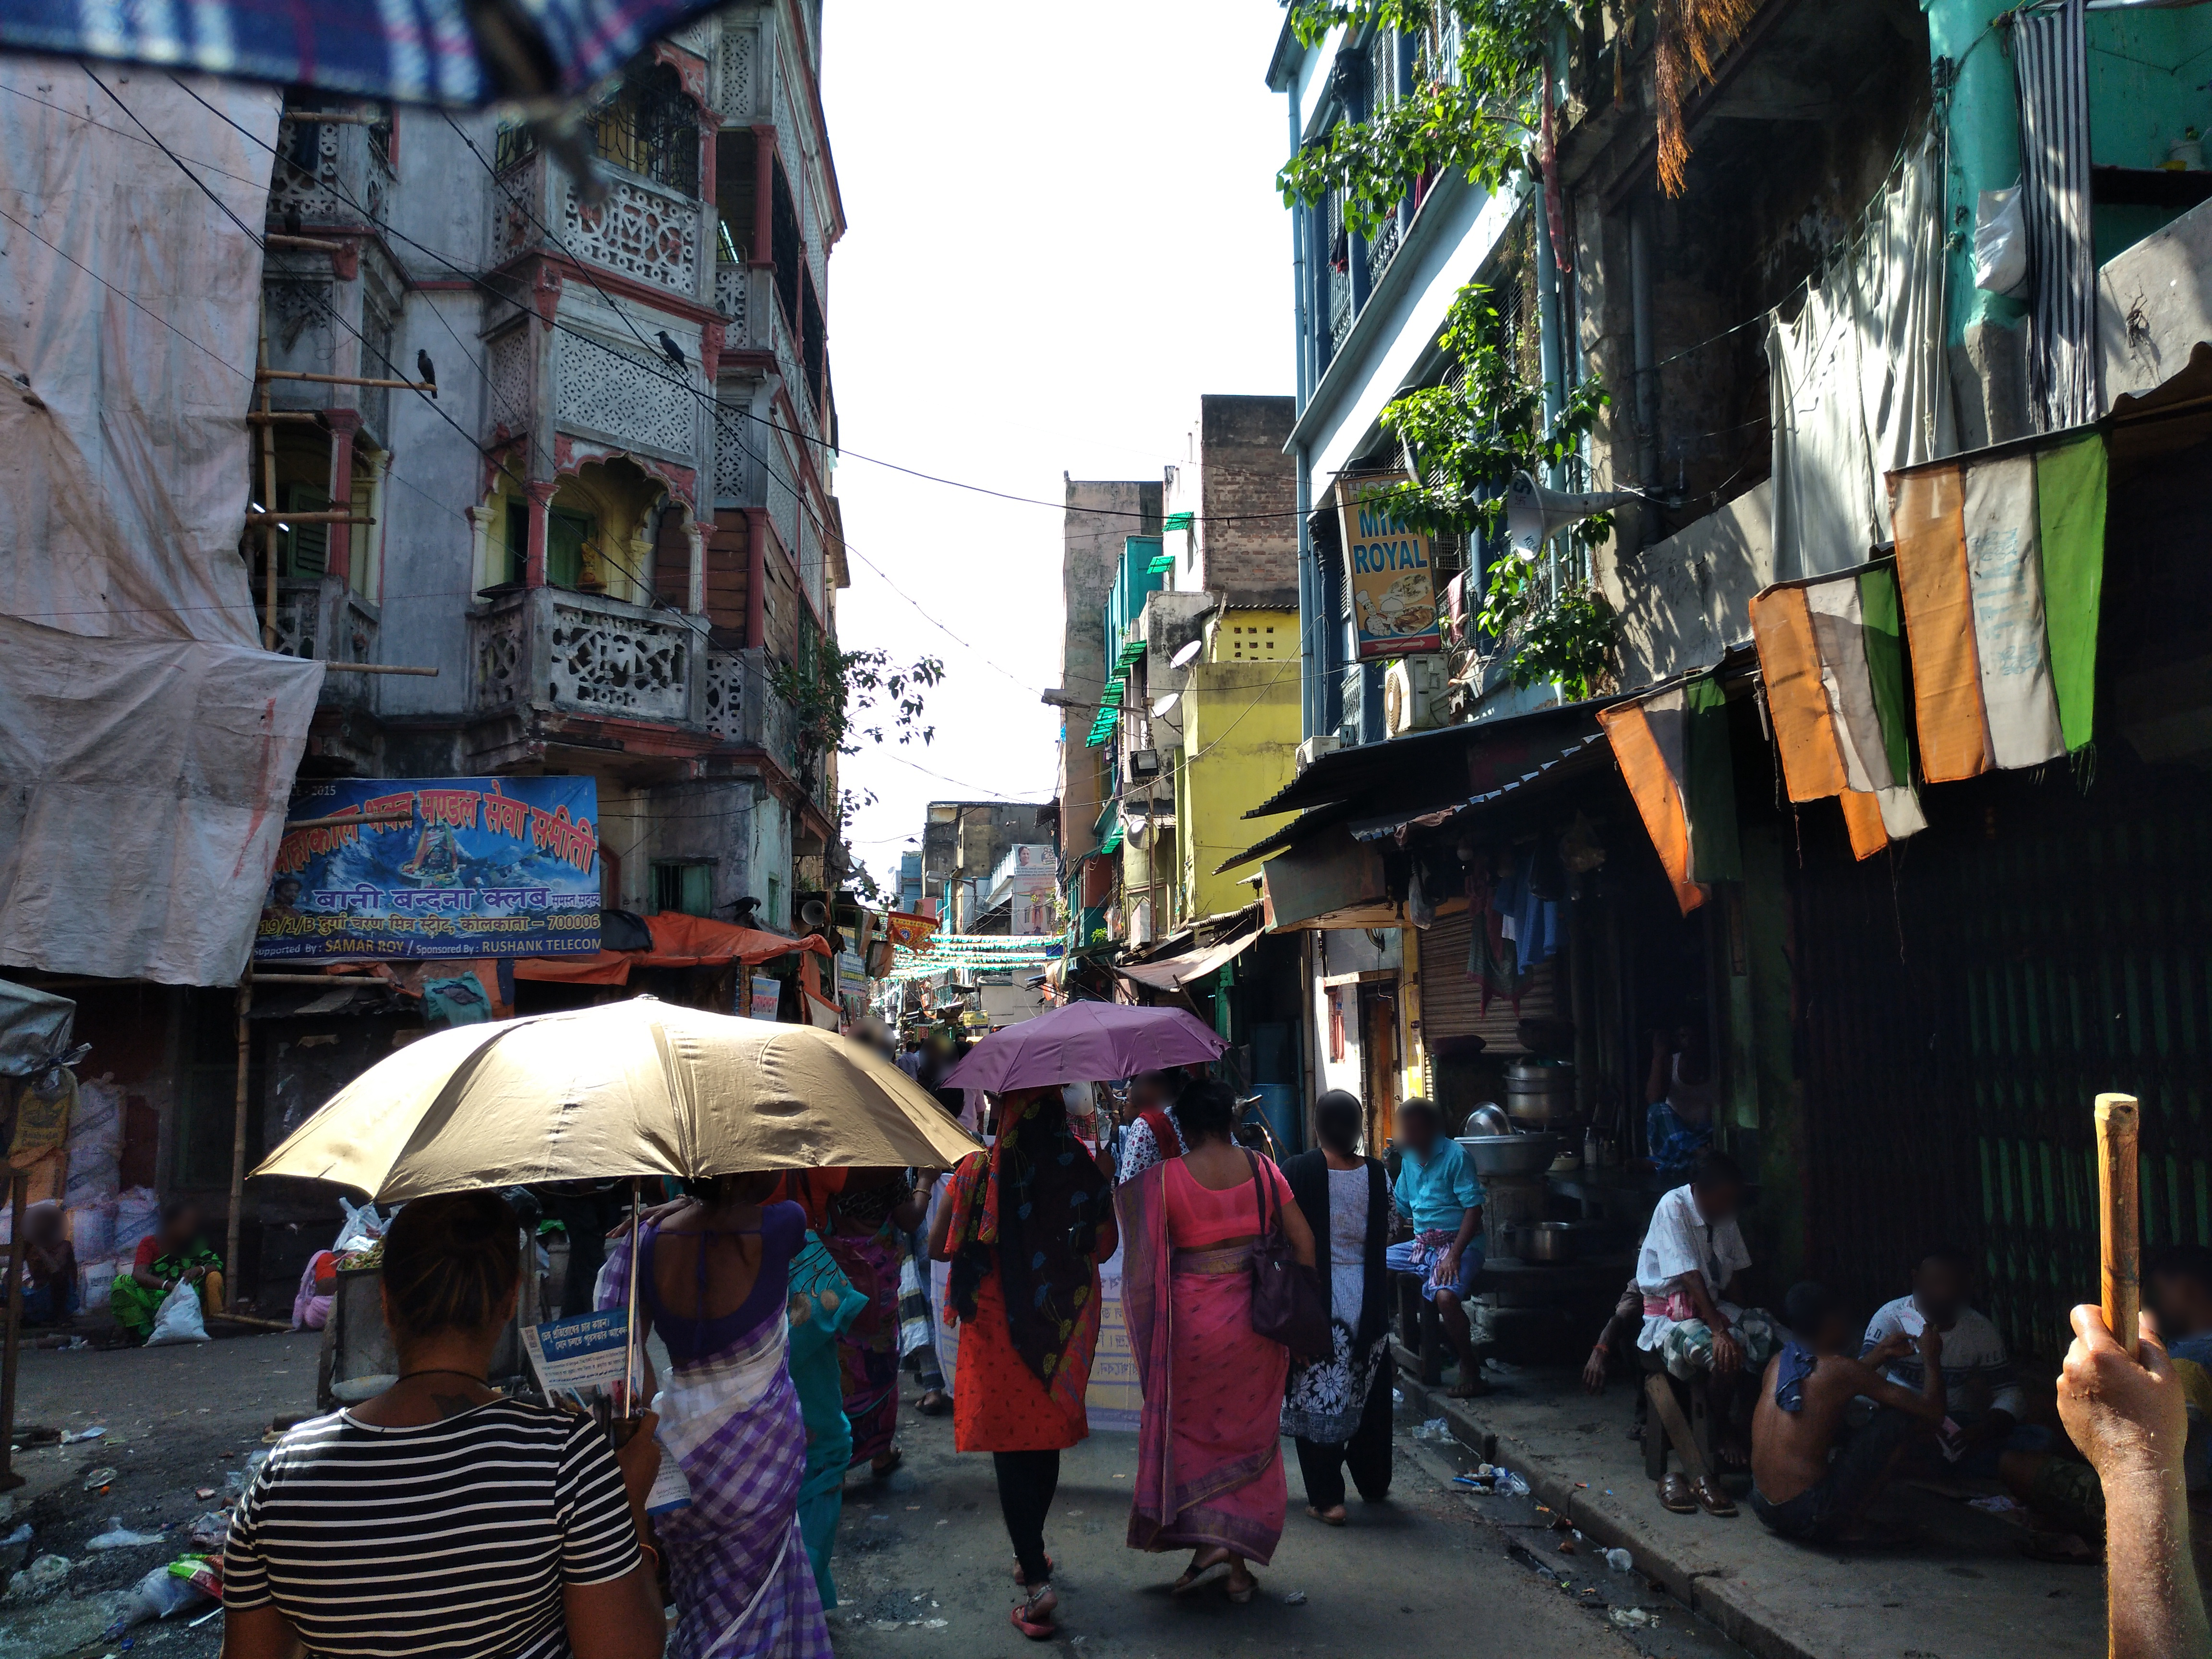 Sonagachi, Kolkata. India’s largest red-light district